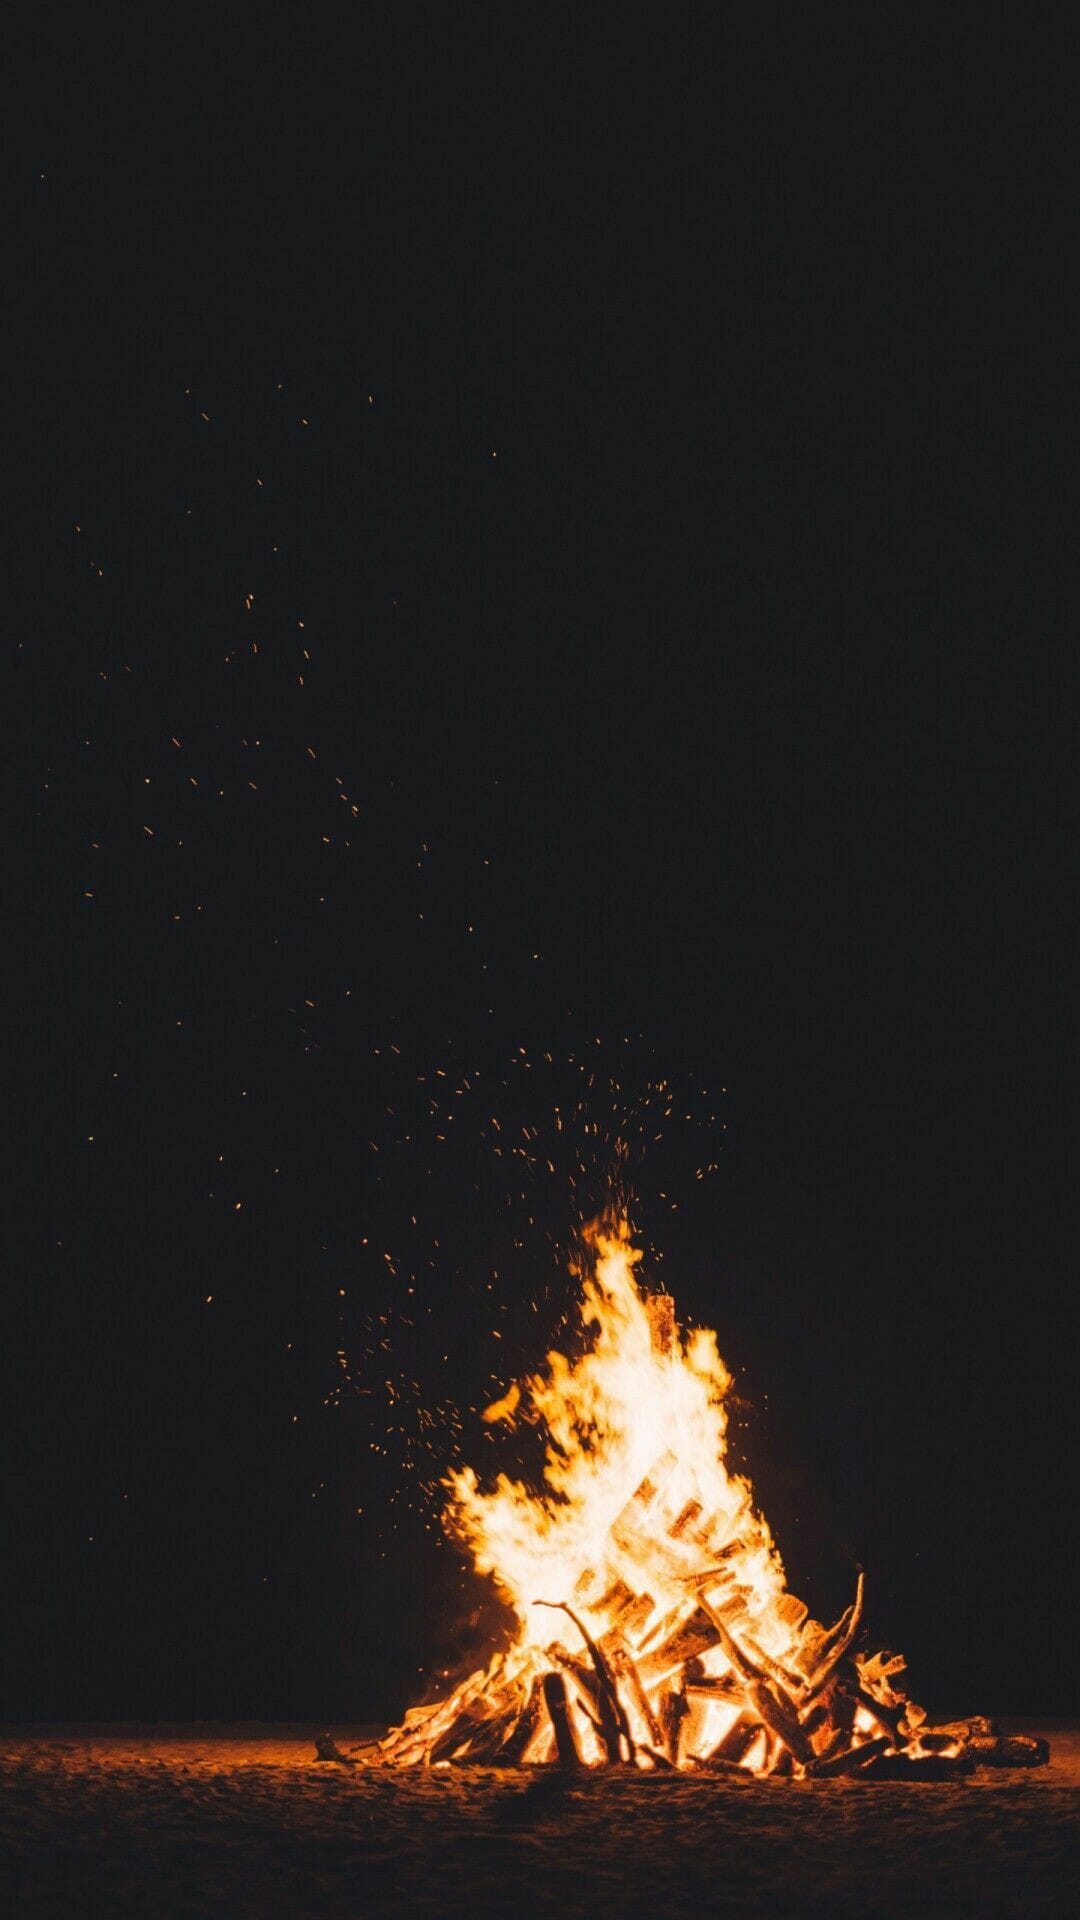 A bonfire burning in the dark - Fire